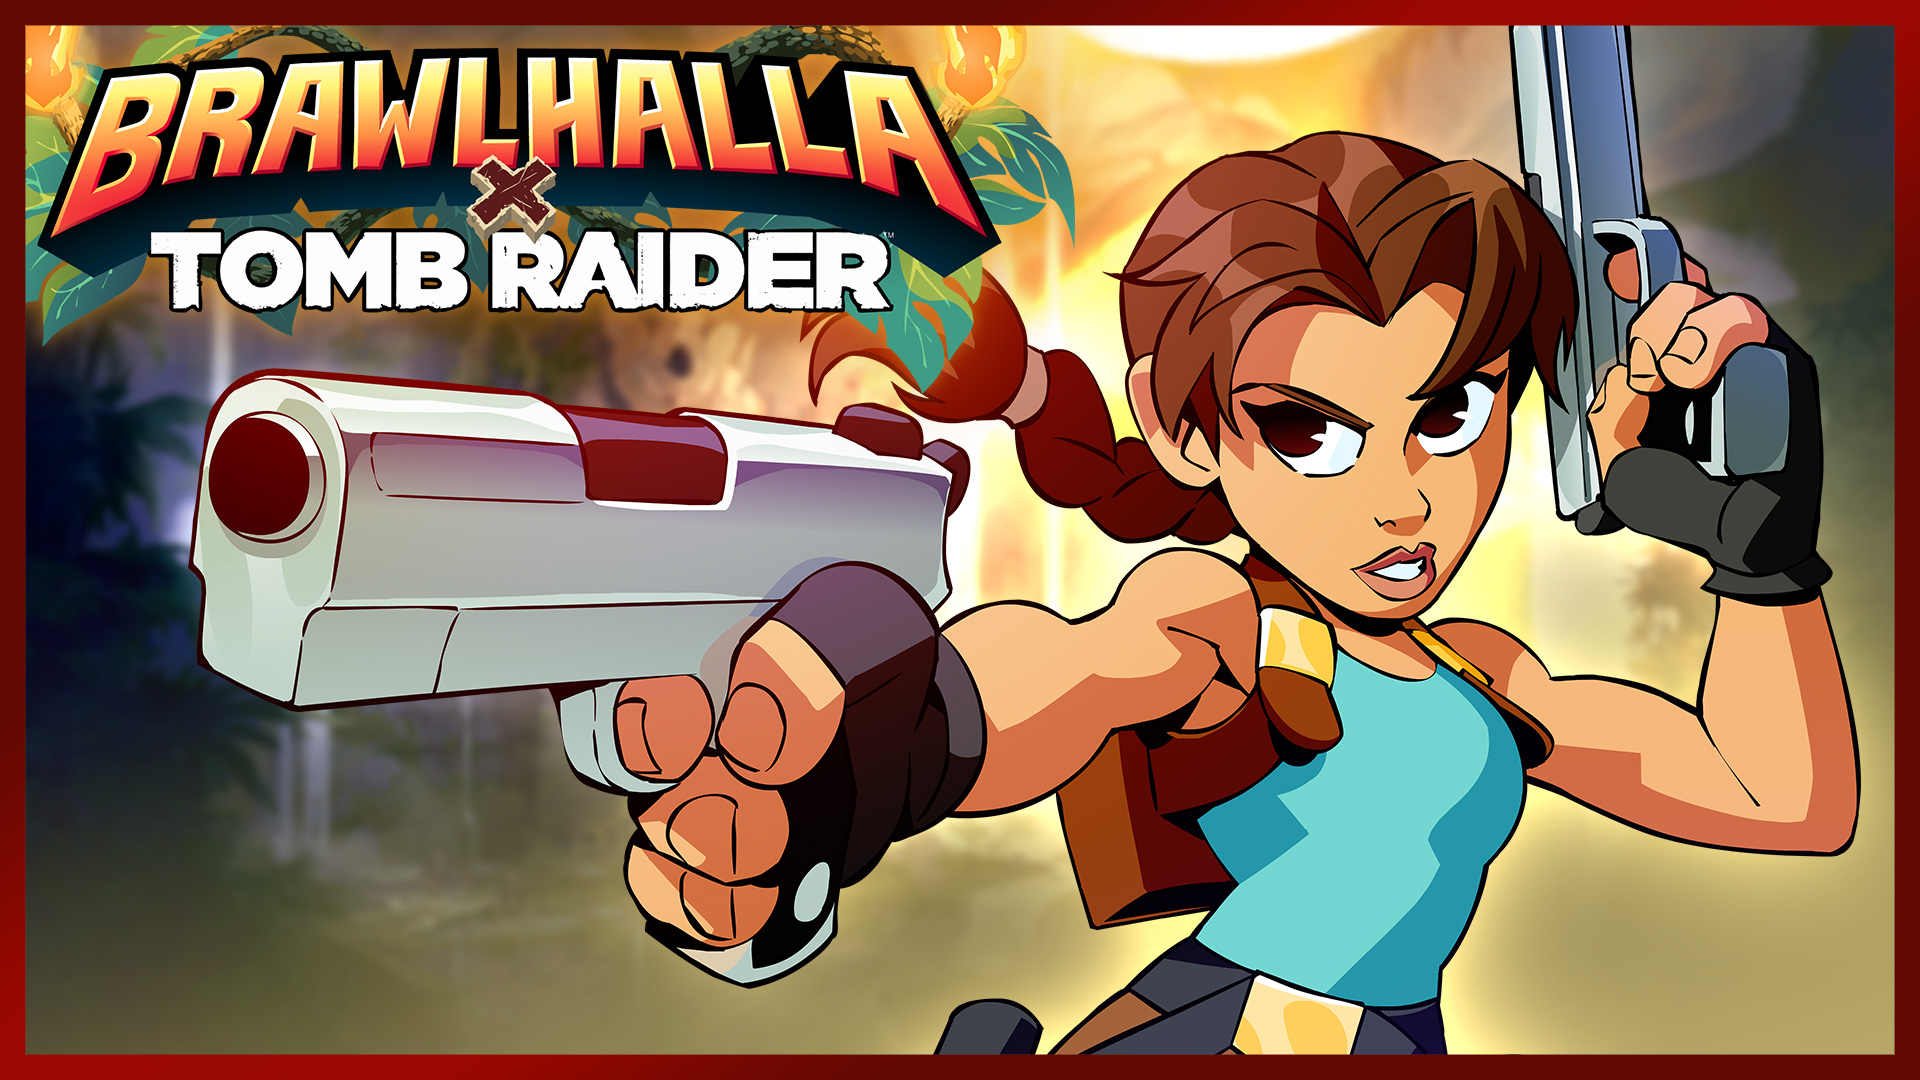 Lara Croft Dari Waralaba Tomb Raider Bergabung dengan Judul Berjuang Free-To-Play Epic, Brawlhalla